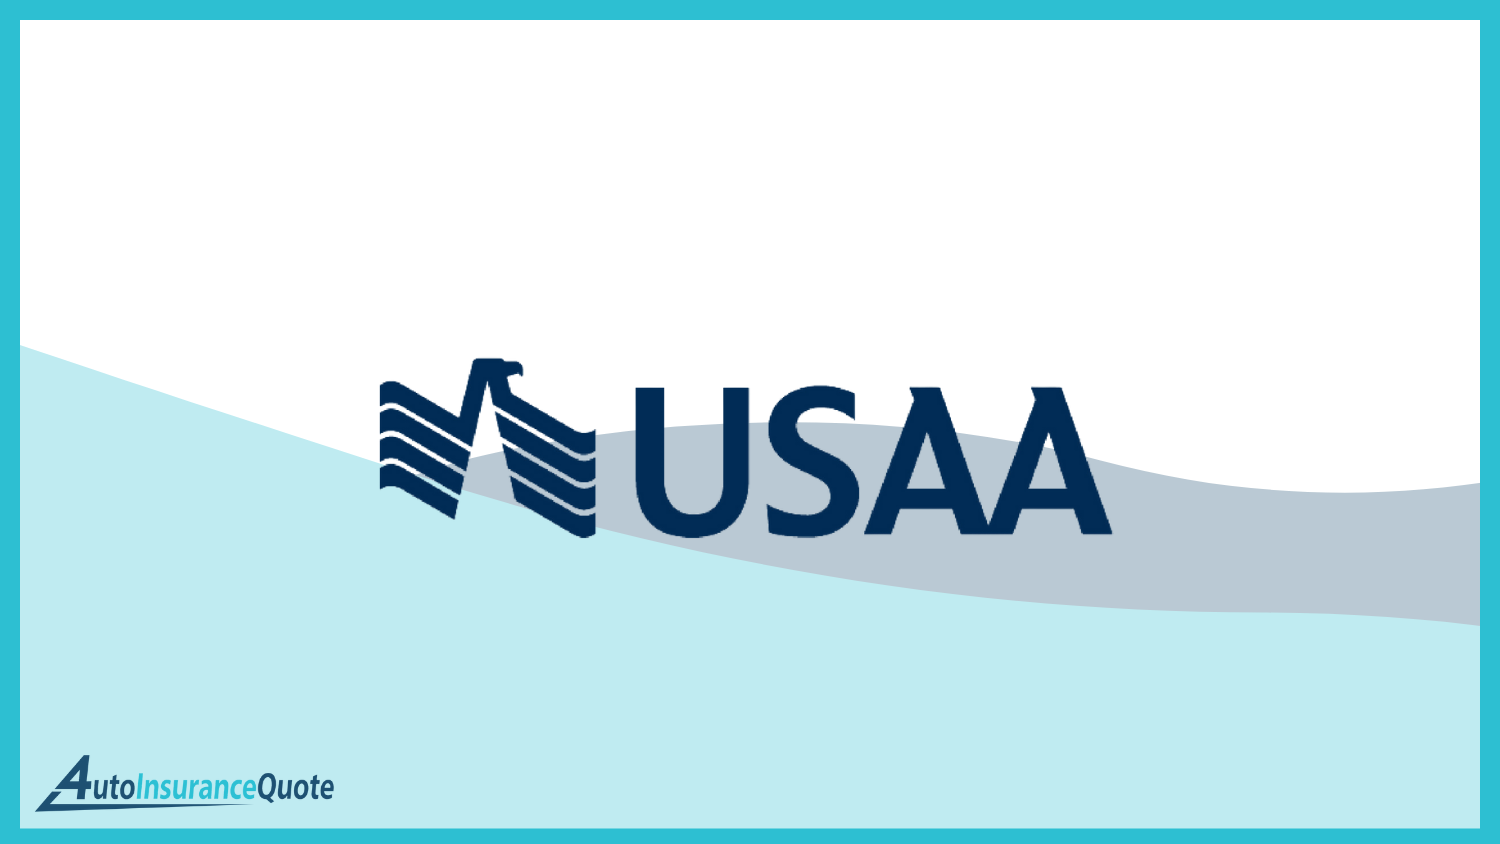 USAA: Best Auto Insurance Companies for Seniors